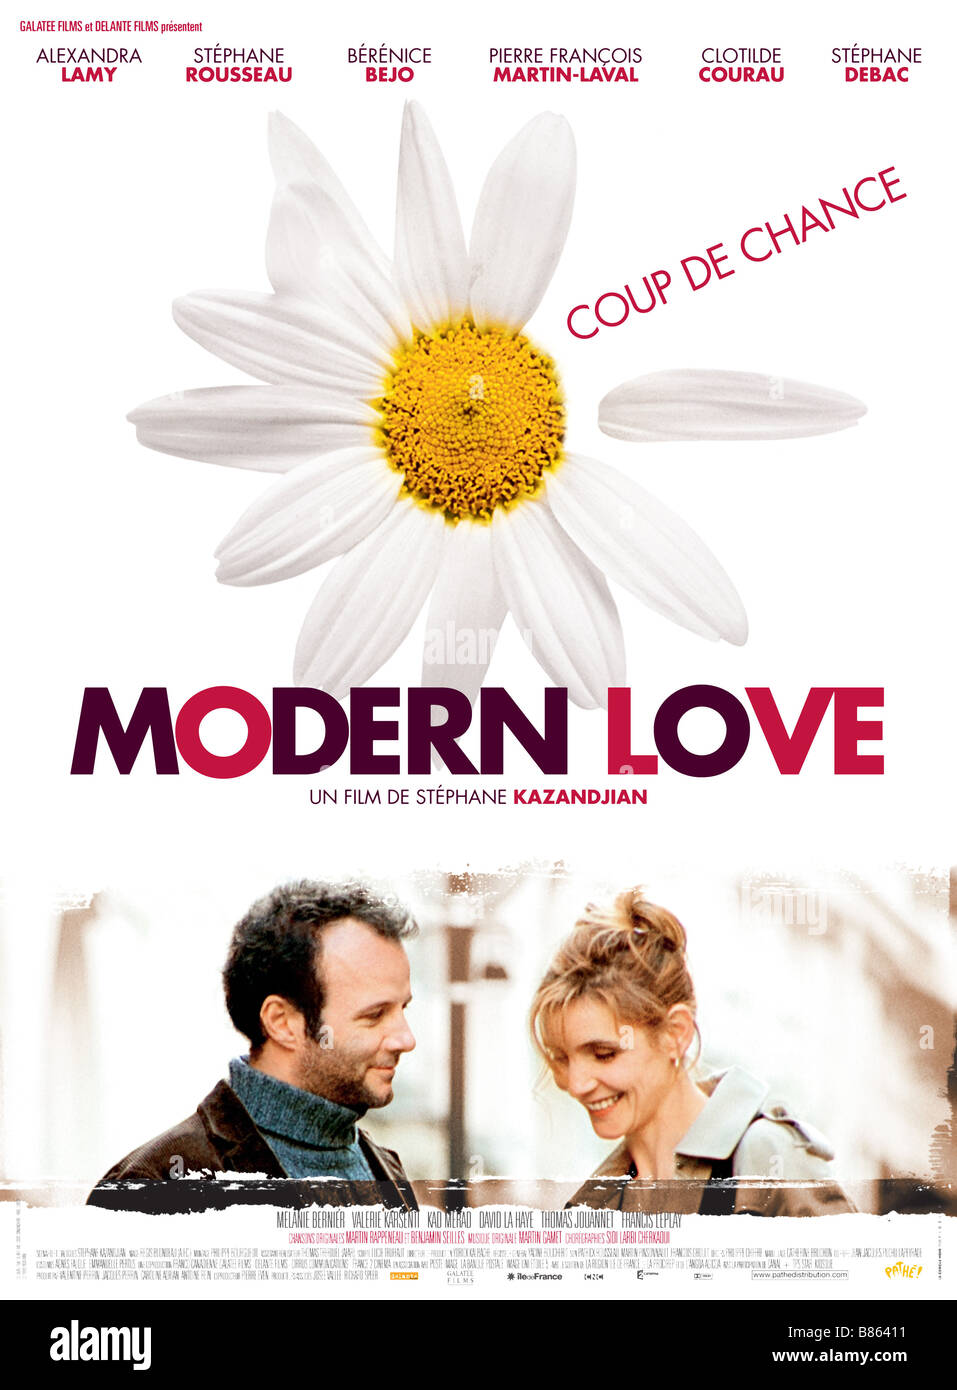 Modern Love Year : 2008 France Pierre François Martin-Laval, Clotilde Courau  Director: Stephane Kazandjian Movie poster (Fr) Stock Photo